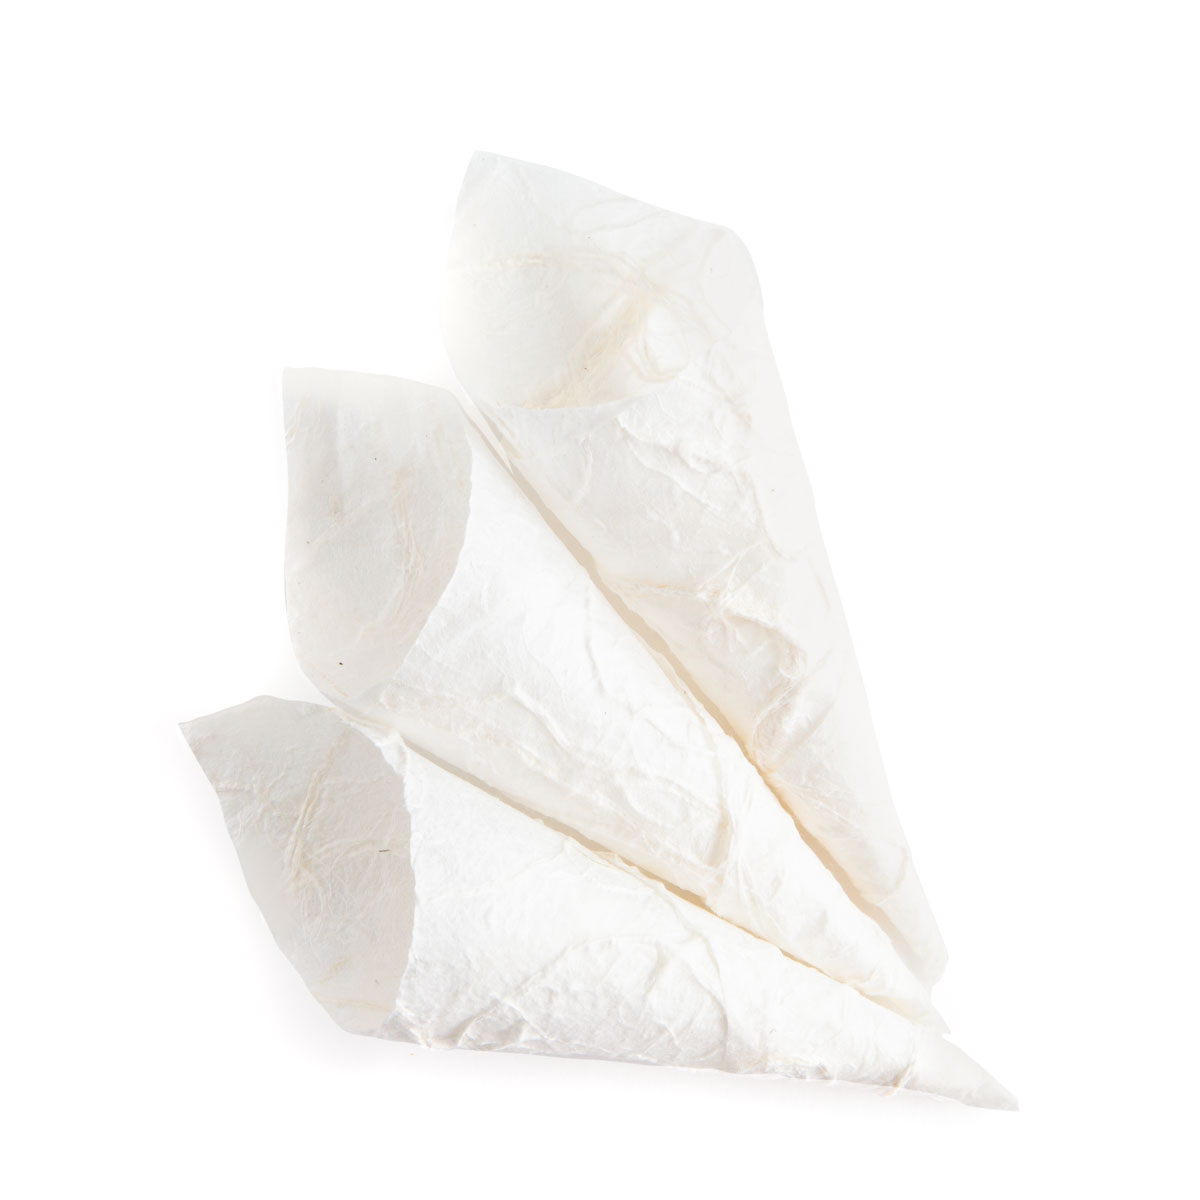 textured paper confetti cones